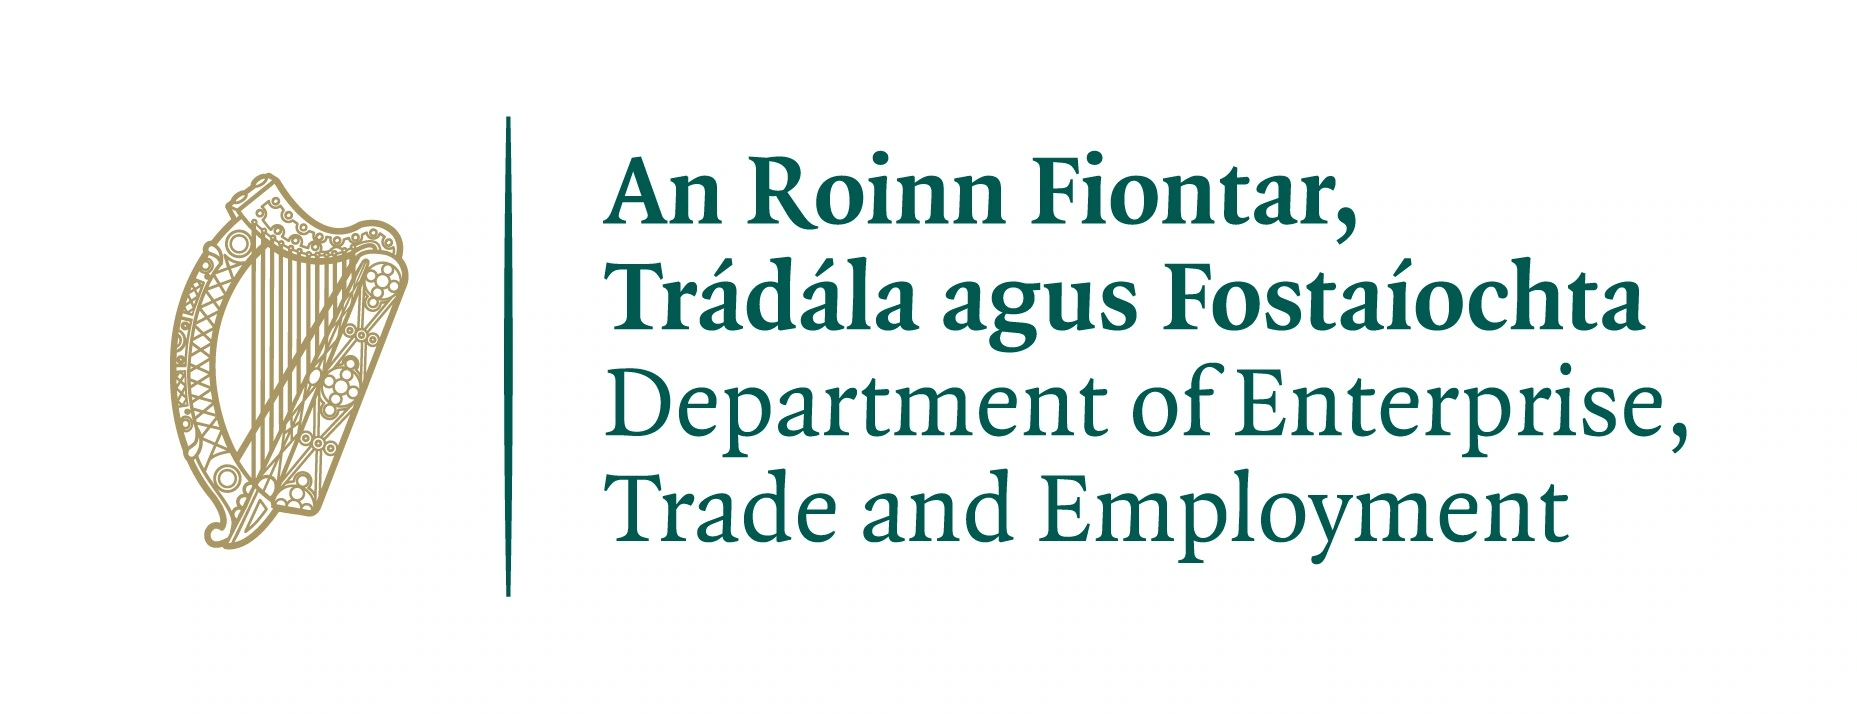 Irish_Department_of_Enterprise,_Trade_and_Employment_logo